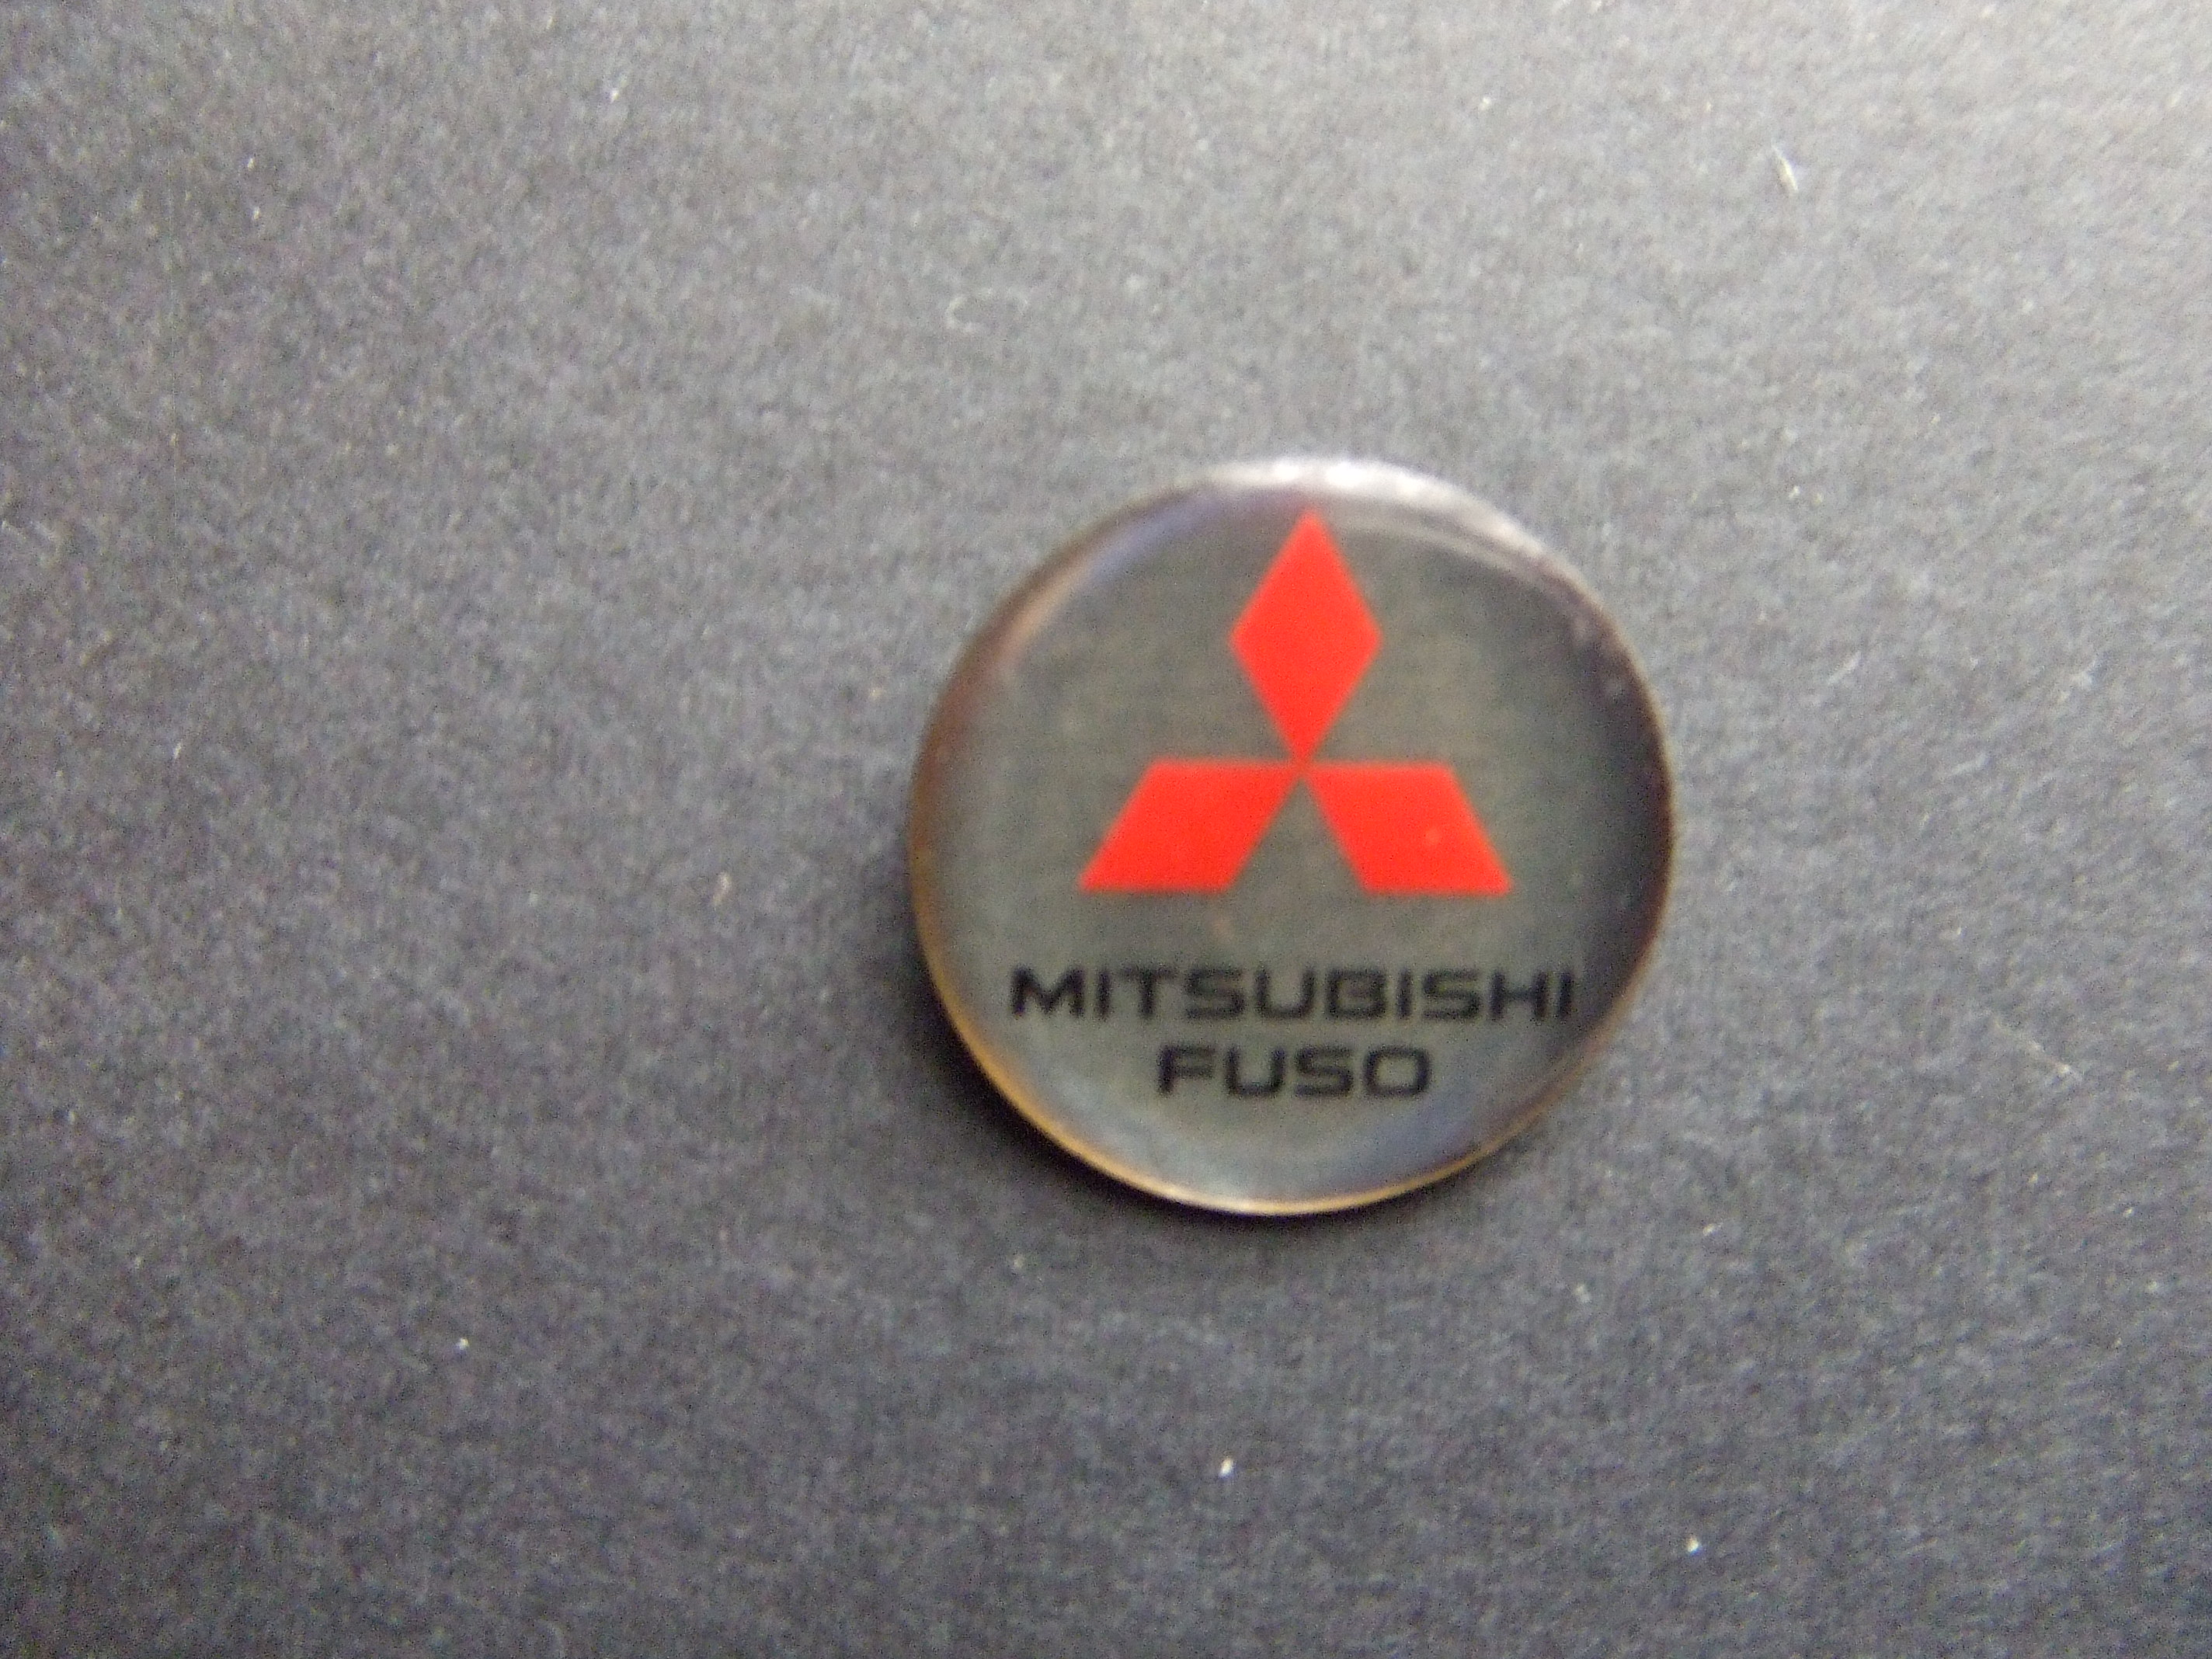 Mitsubishi Fuso bedrijfswagens